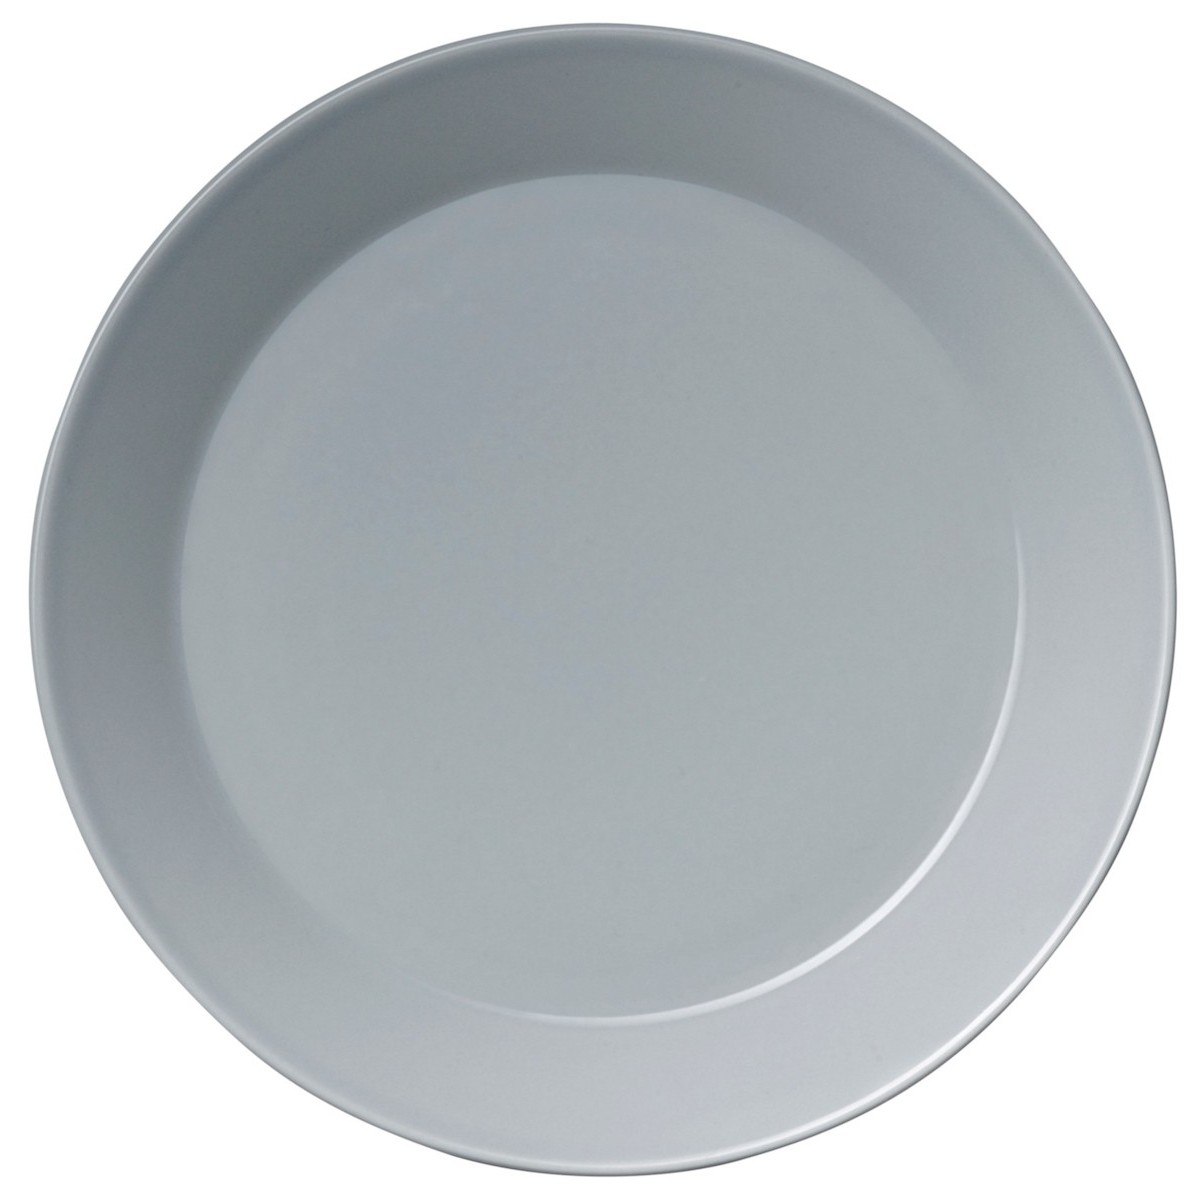 Ø17cm - Teema plate - pearl grey - 1005889